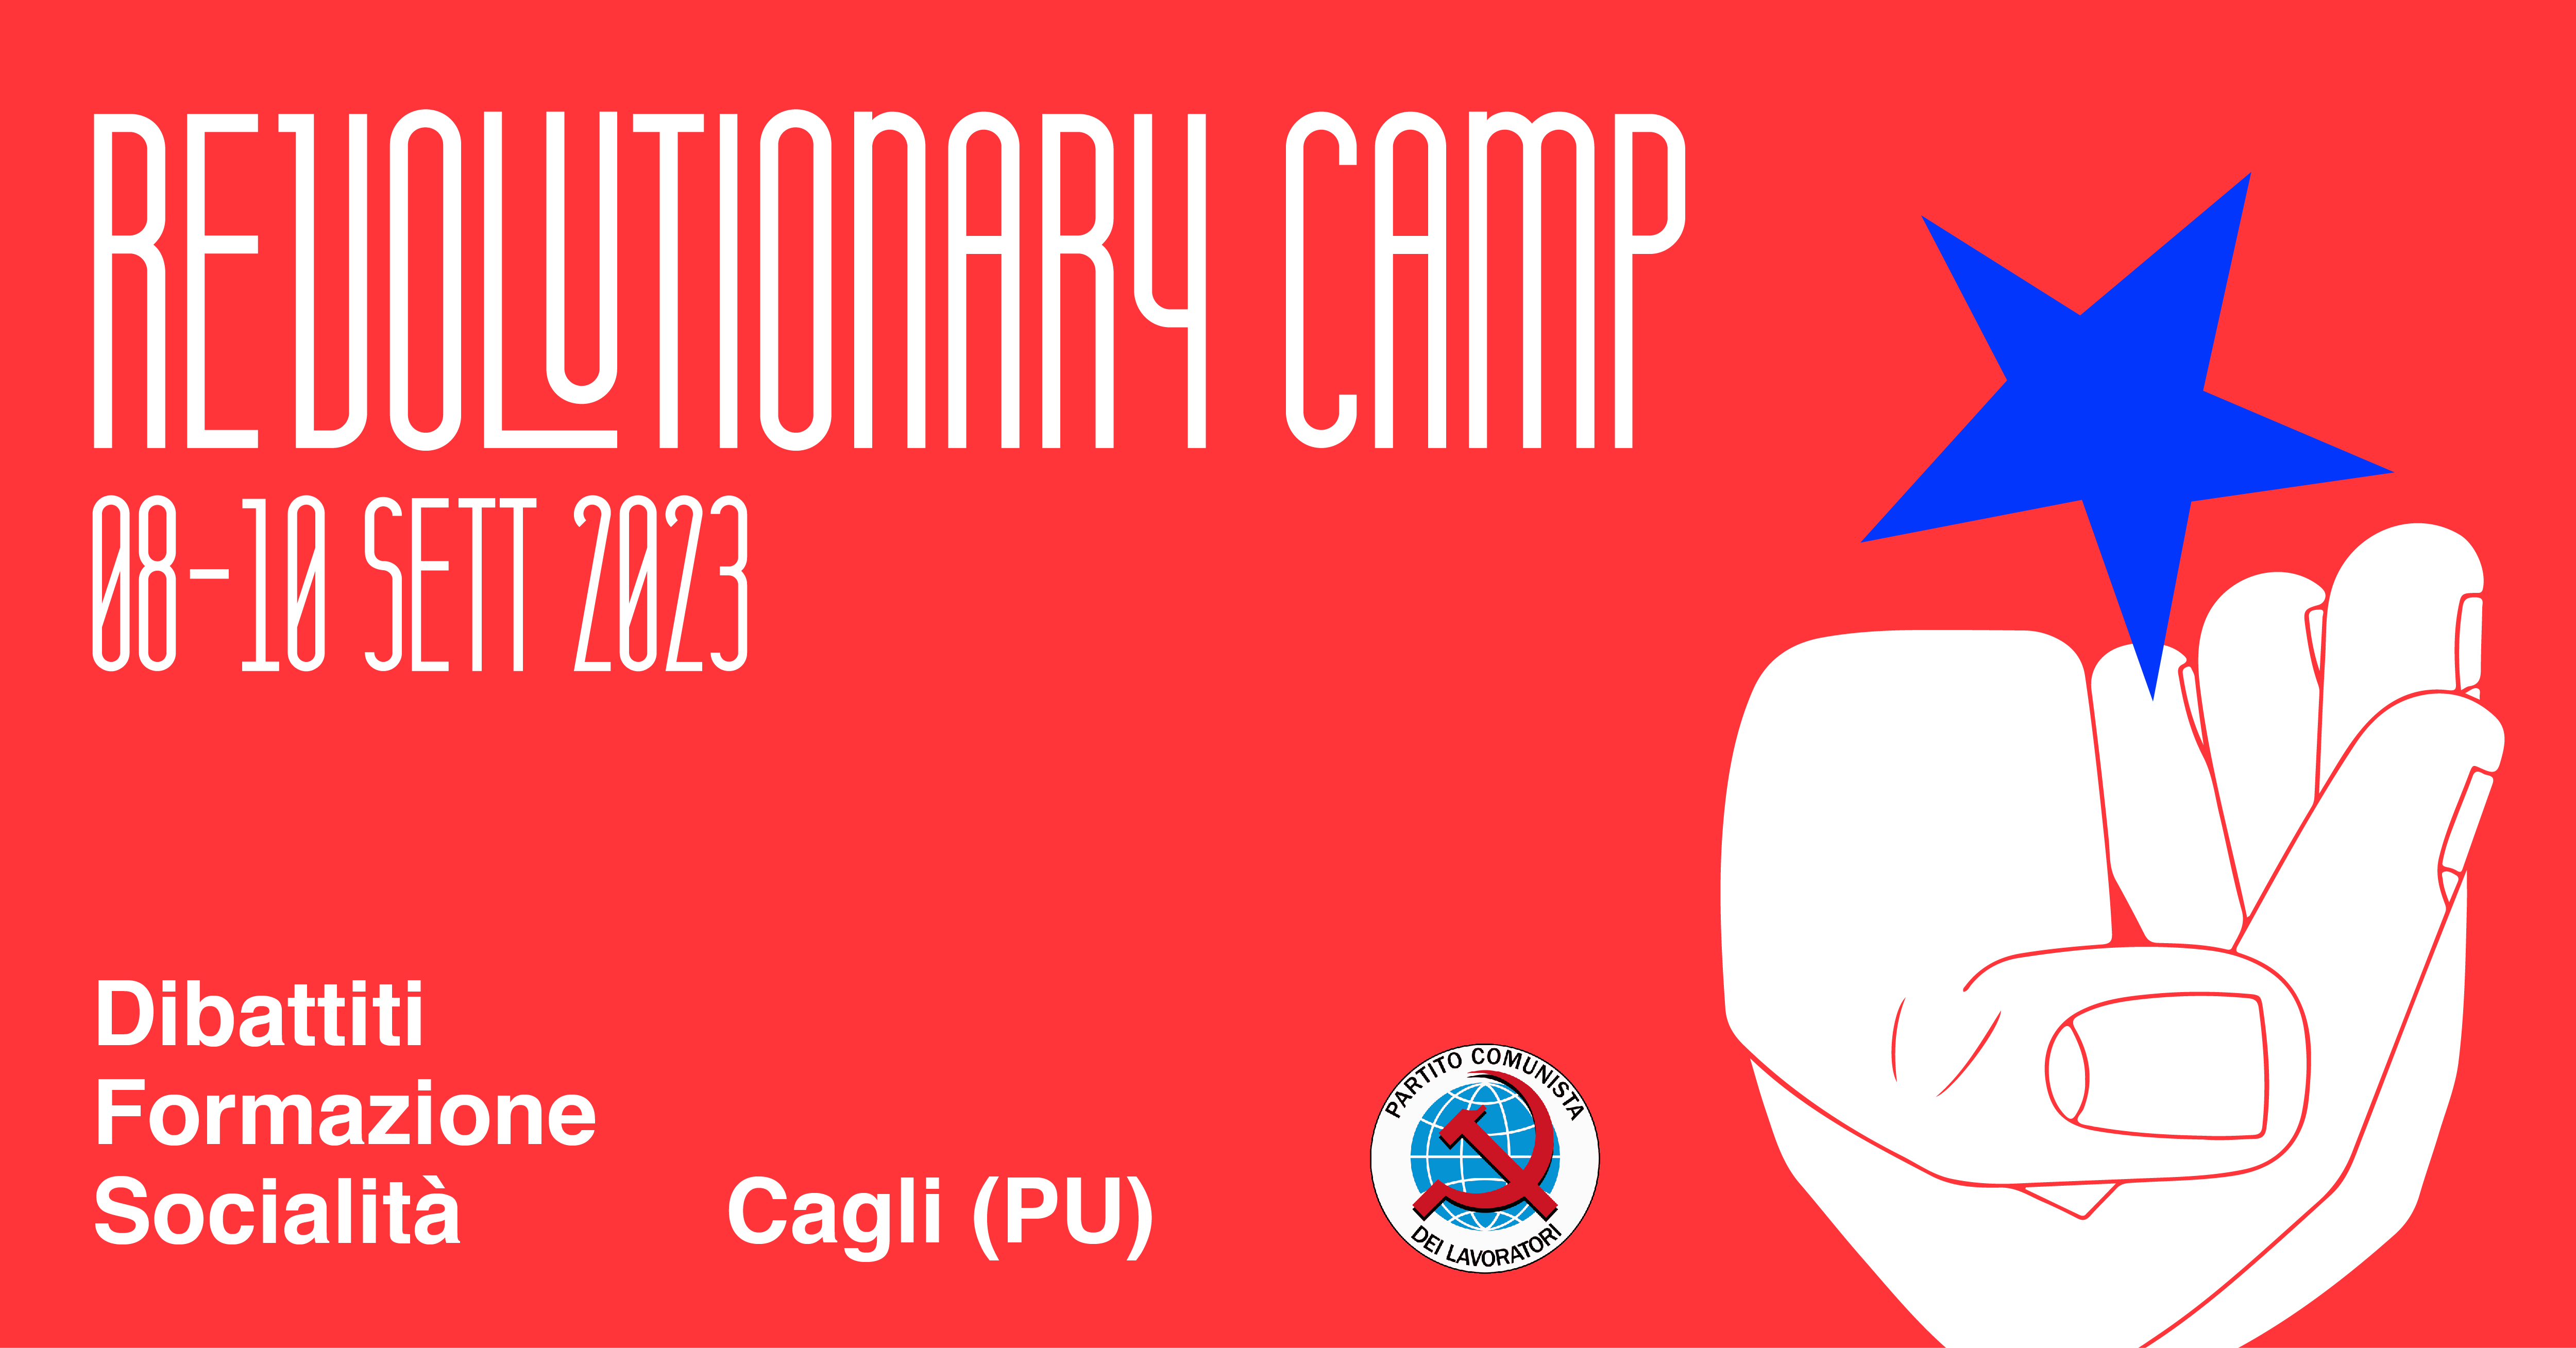 Revolutionary Camp | 8-10 settembre 2023